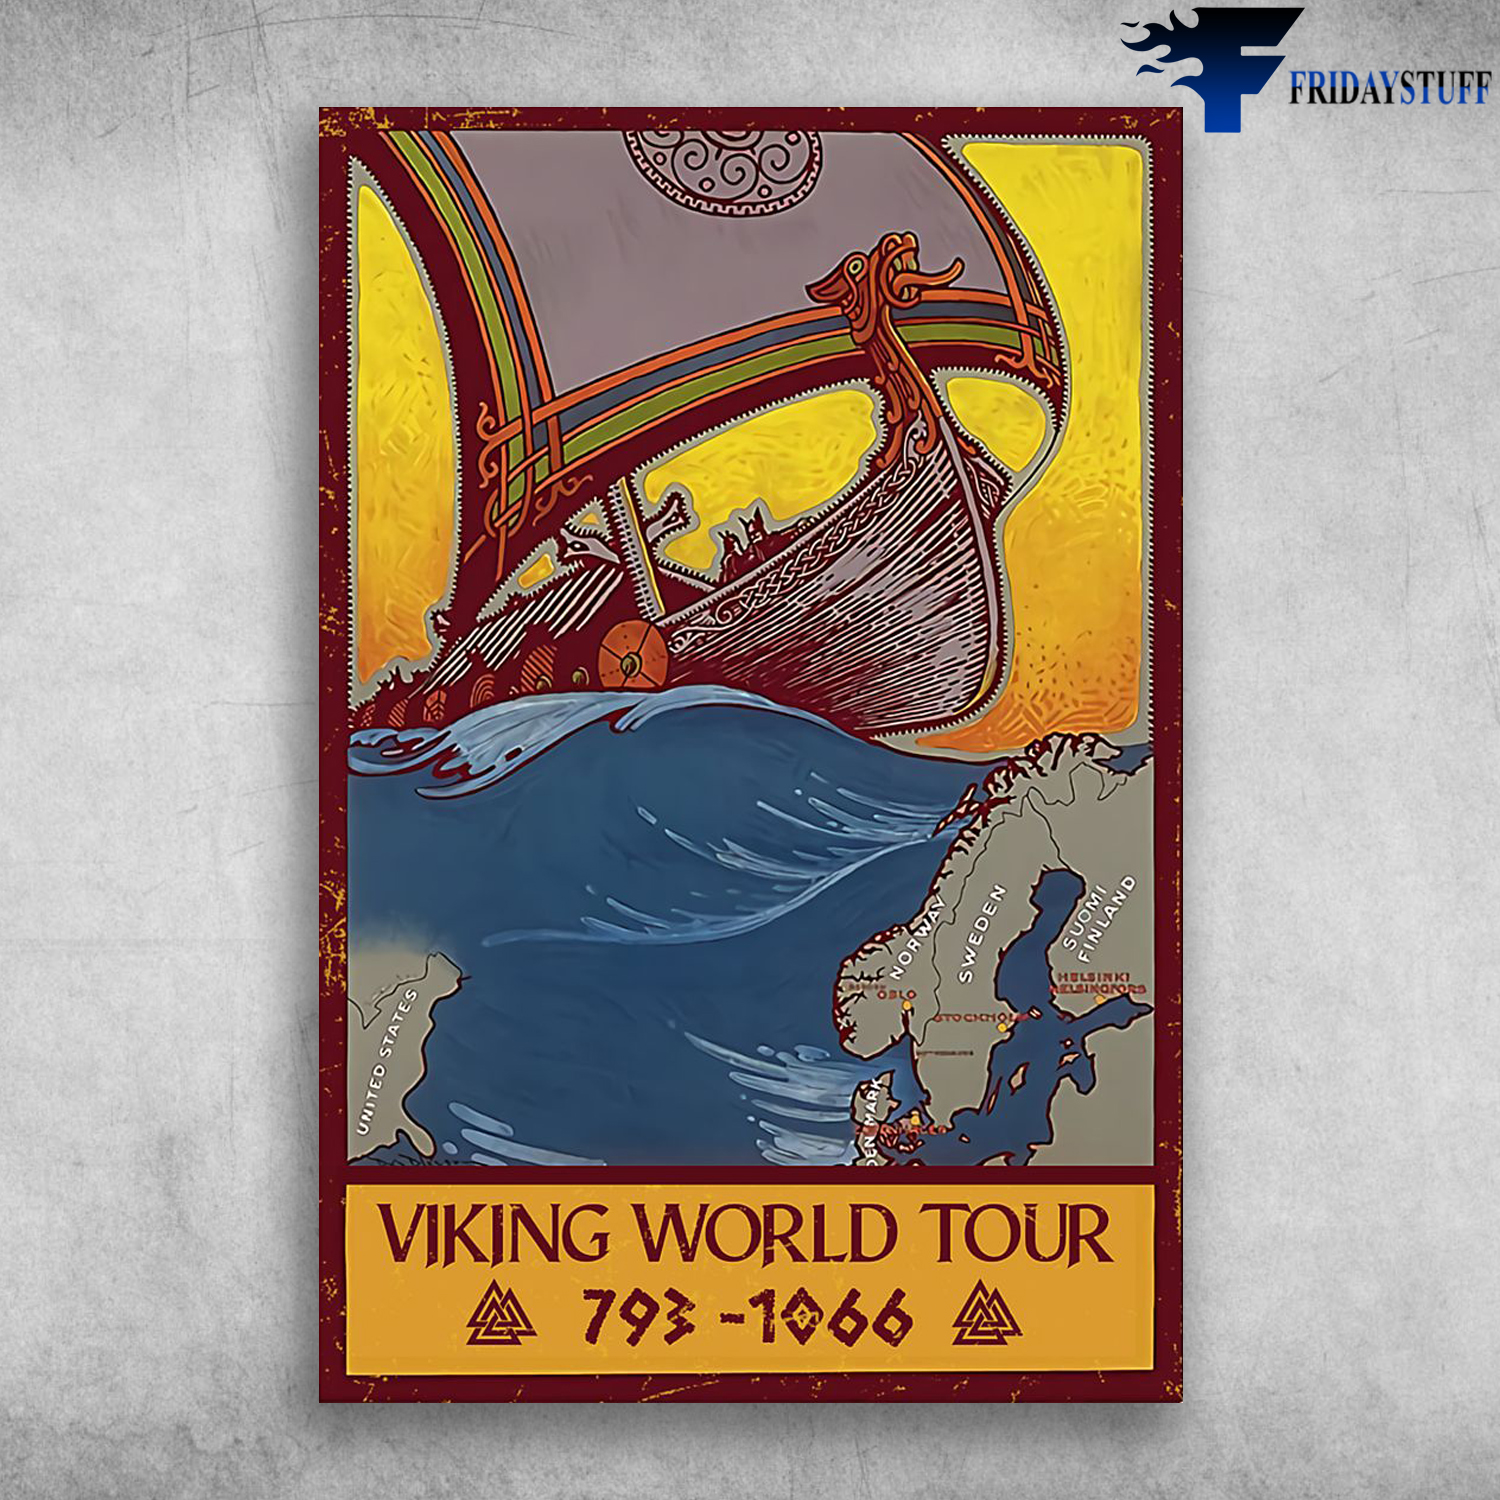 Viking World Tour 793 - 1066